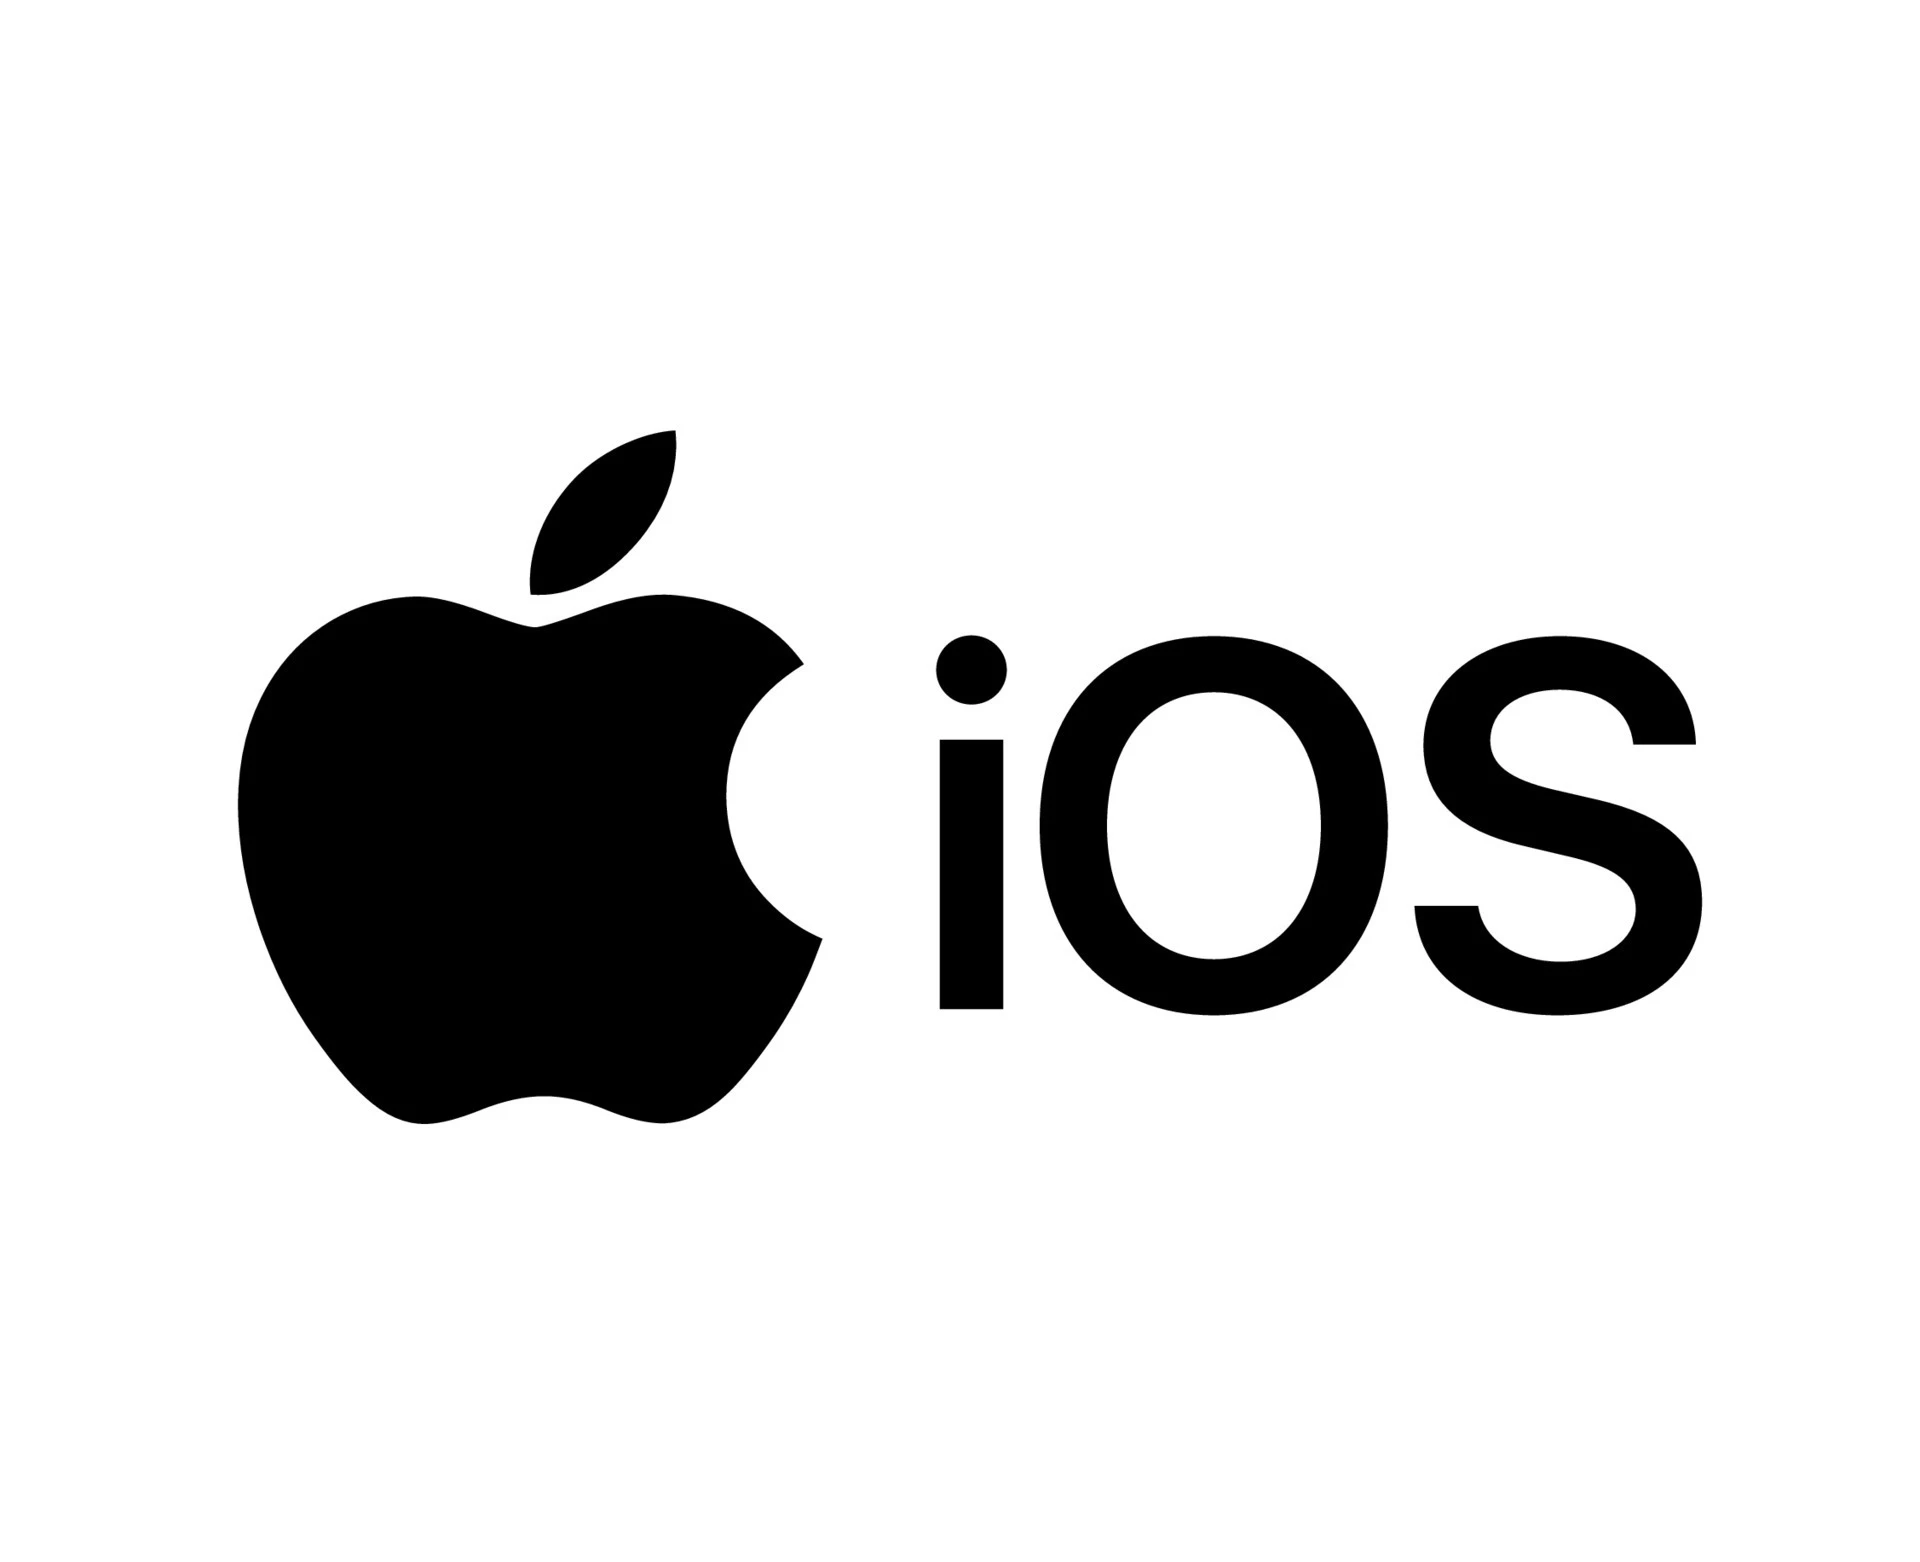 1179-ios-icon-logo-software-phone-apple-symbol-with-name-black-design-mobile-illustra-1698741085937.jpg